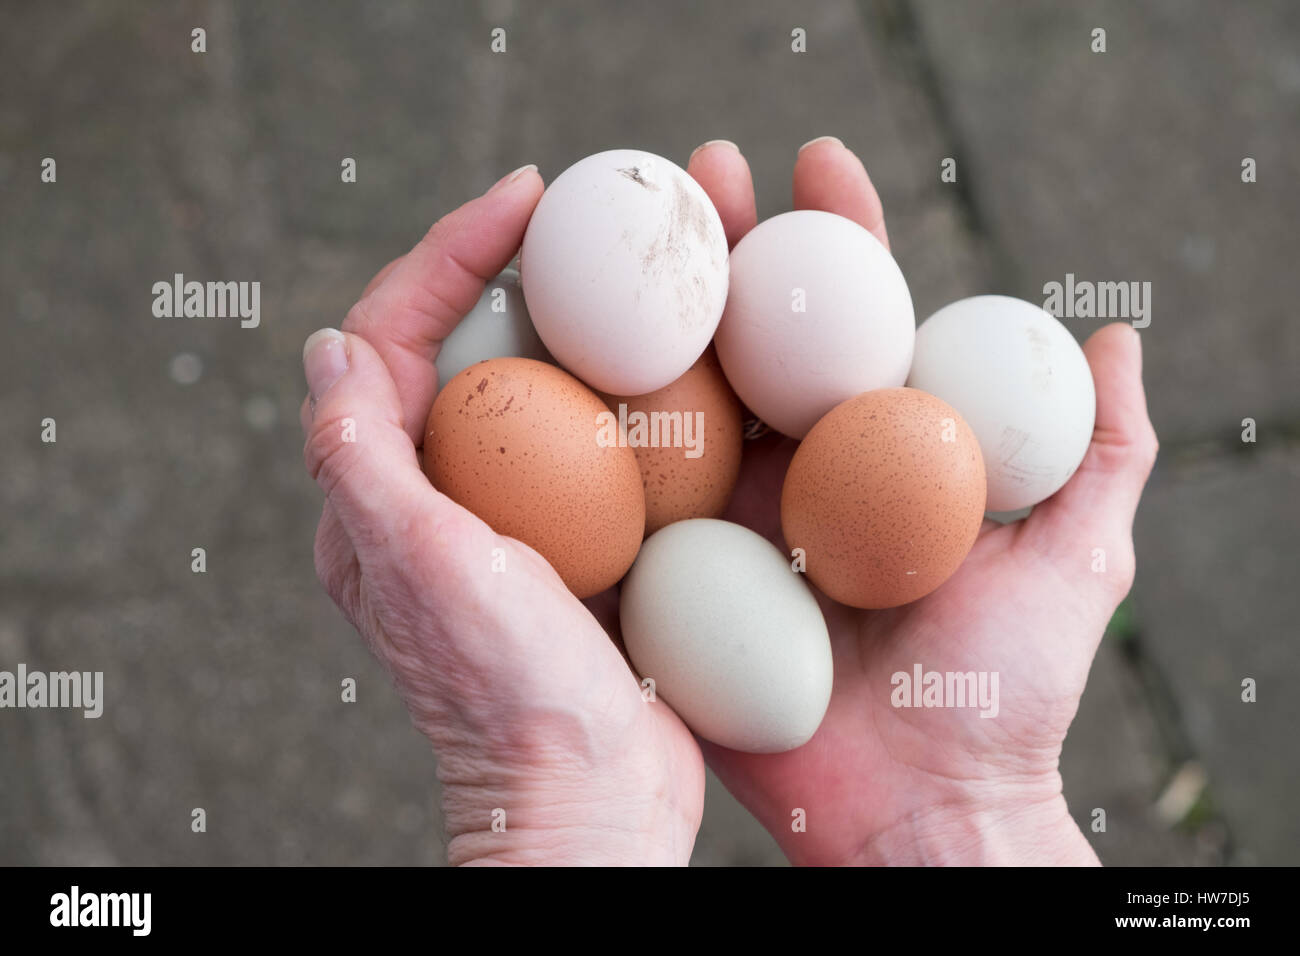 Hands holding freerange eggs Stock Photo